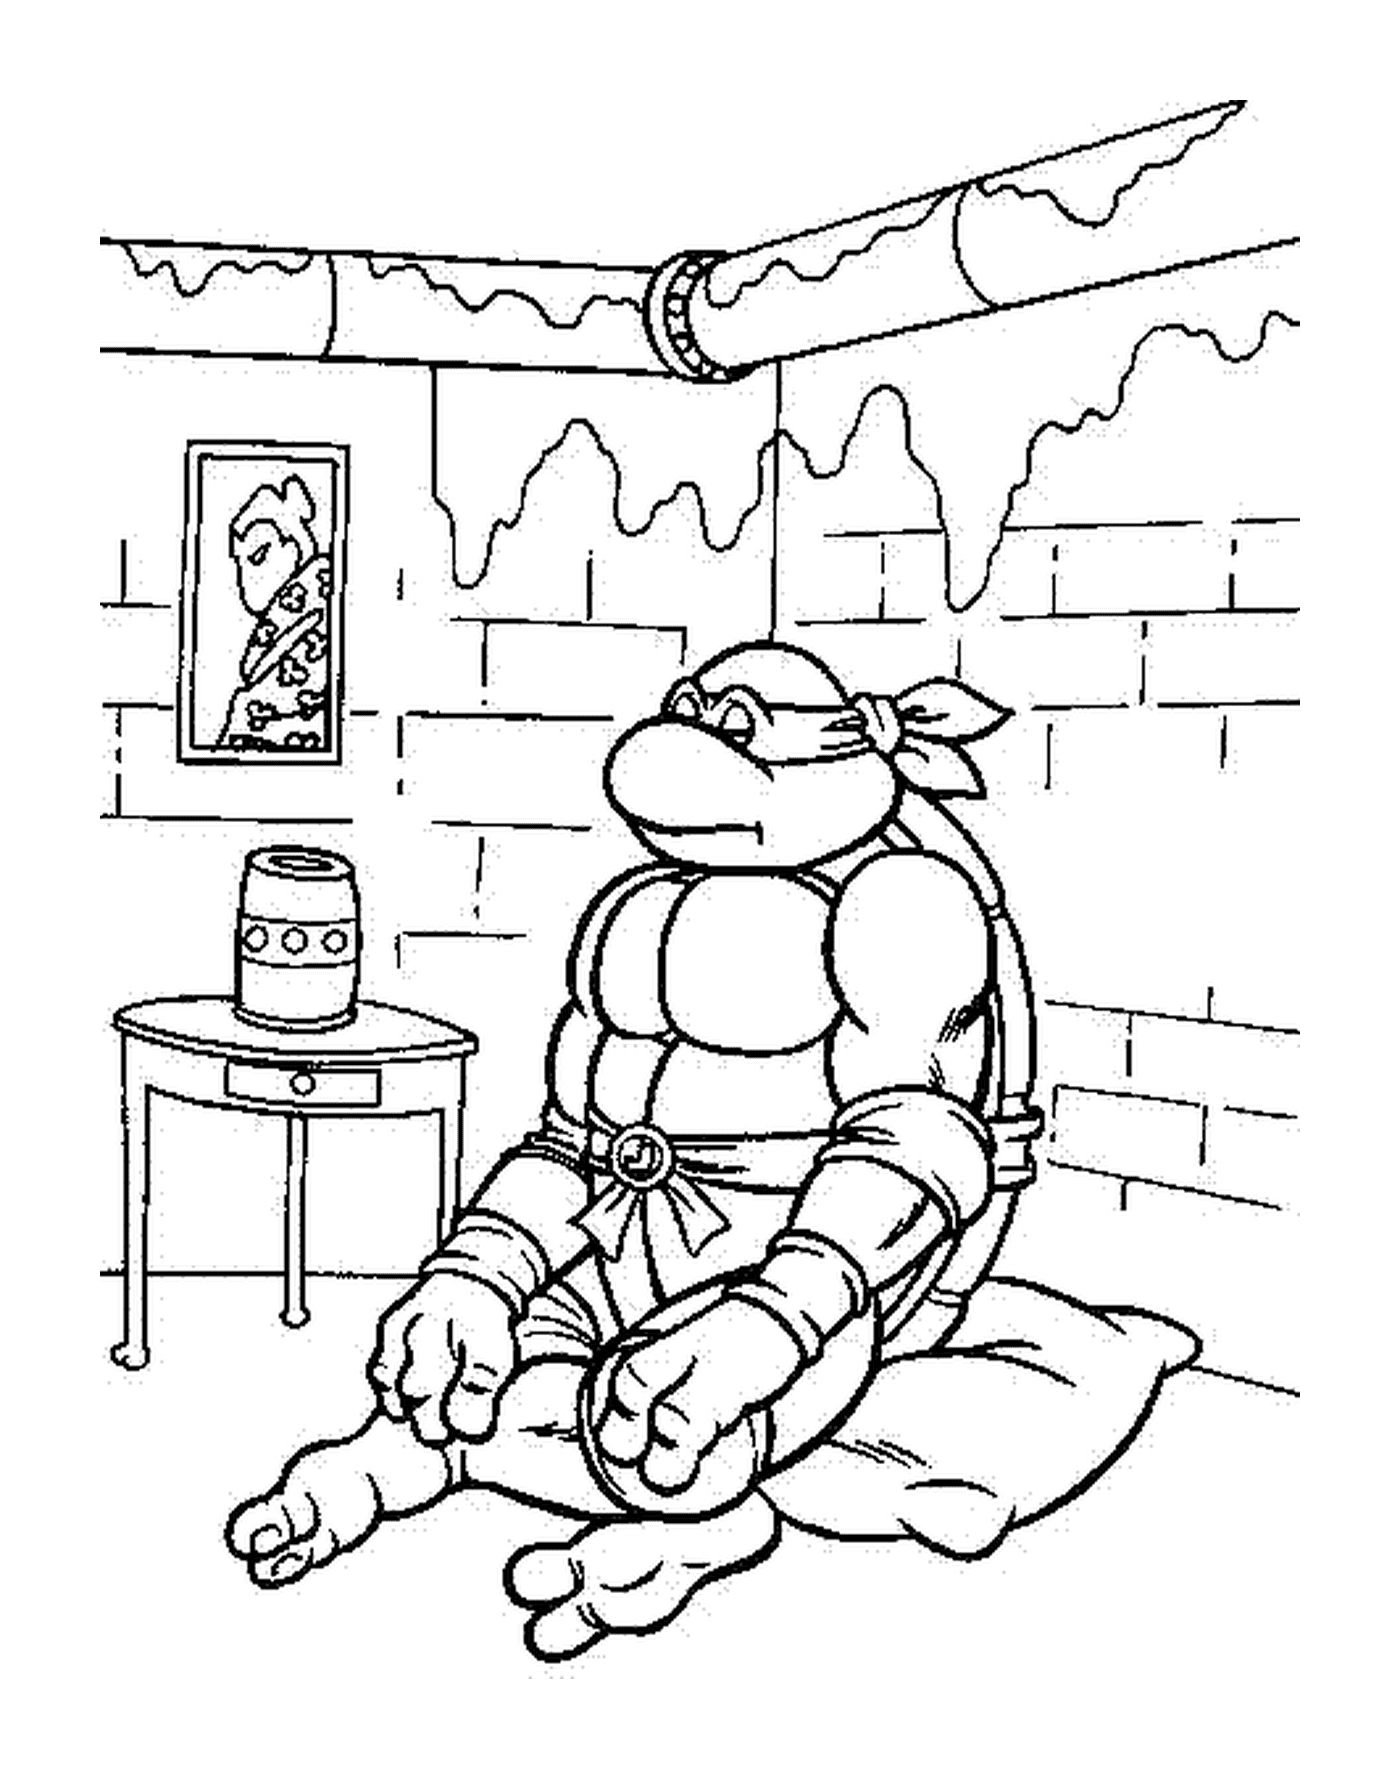  Ninja turtle sitting in a room 